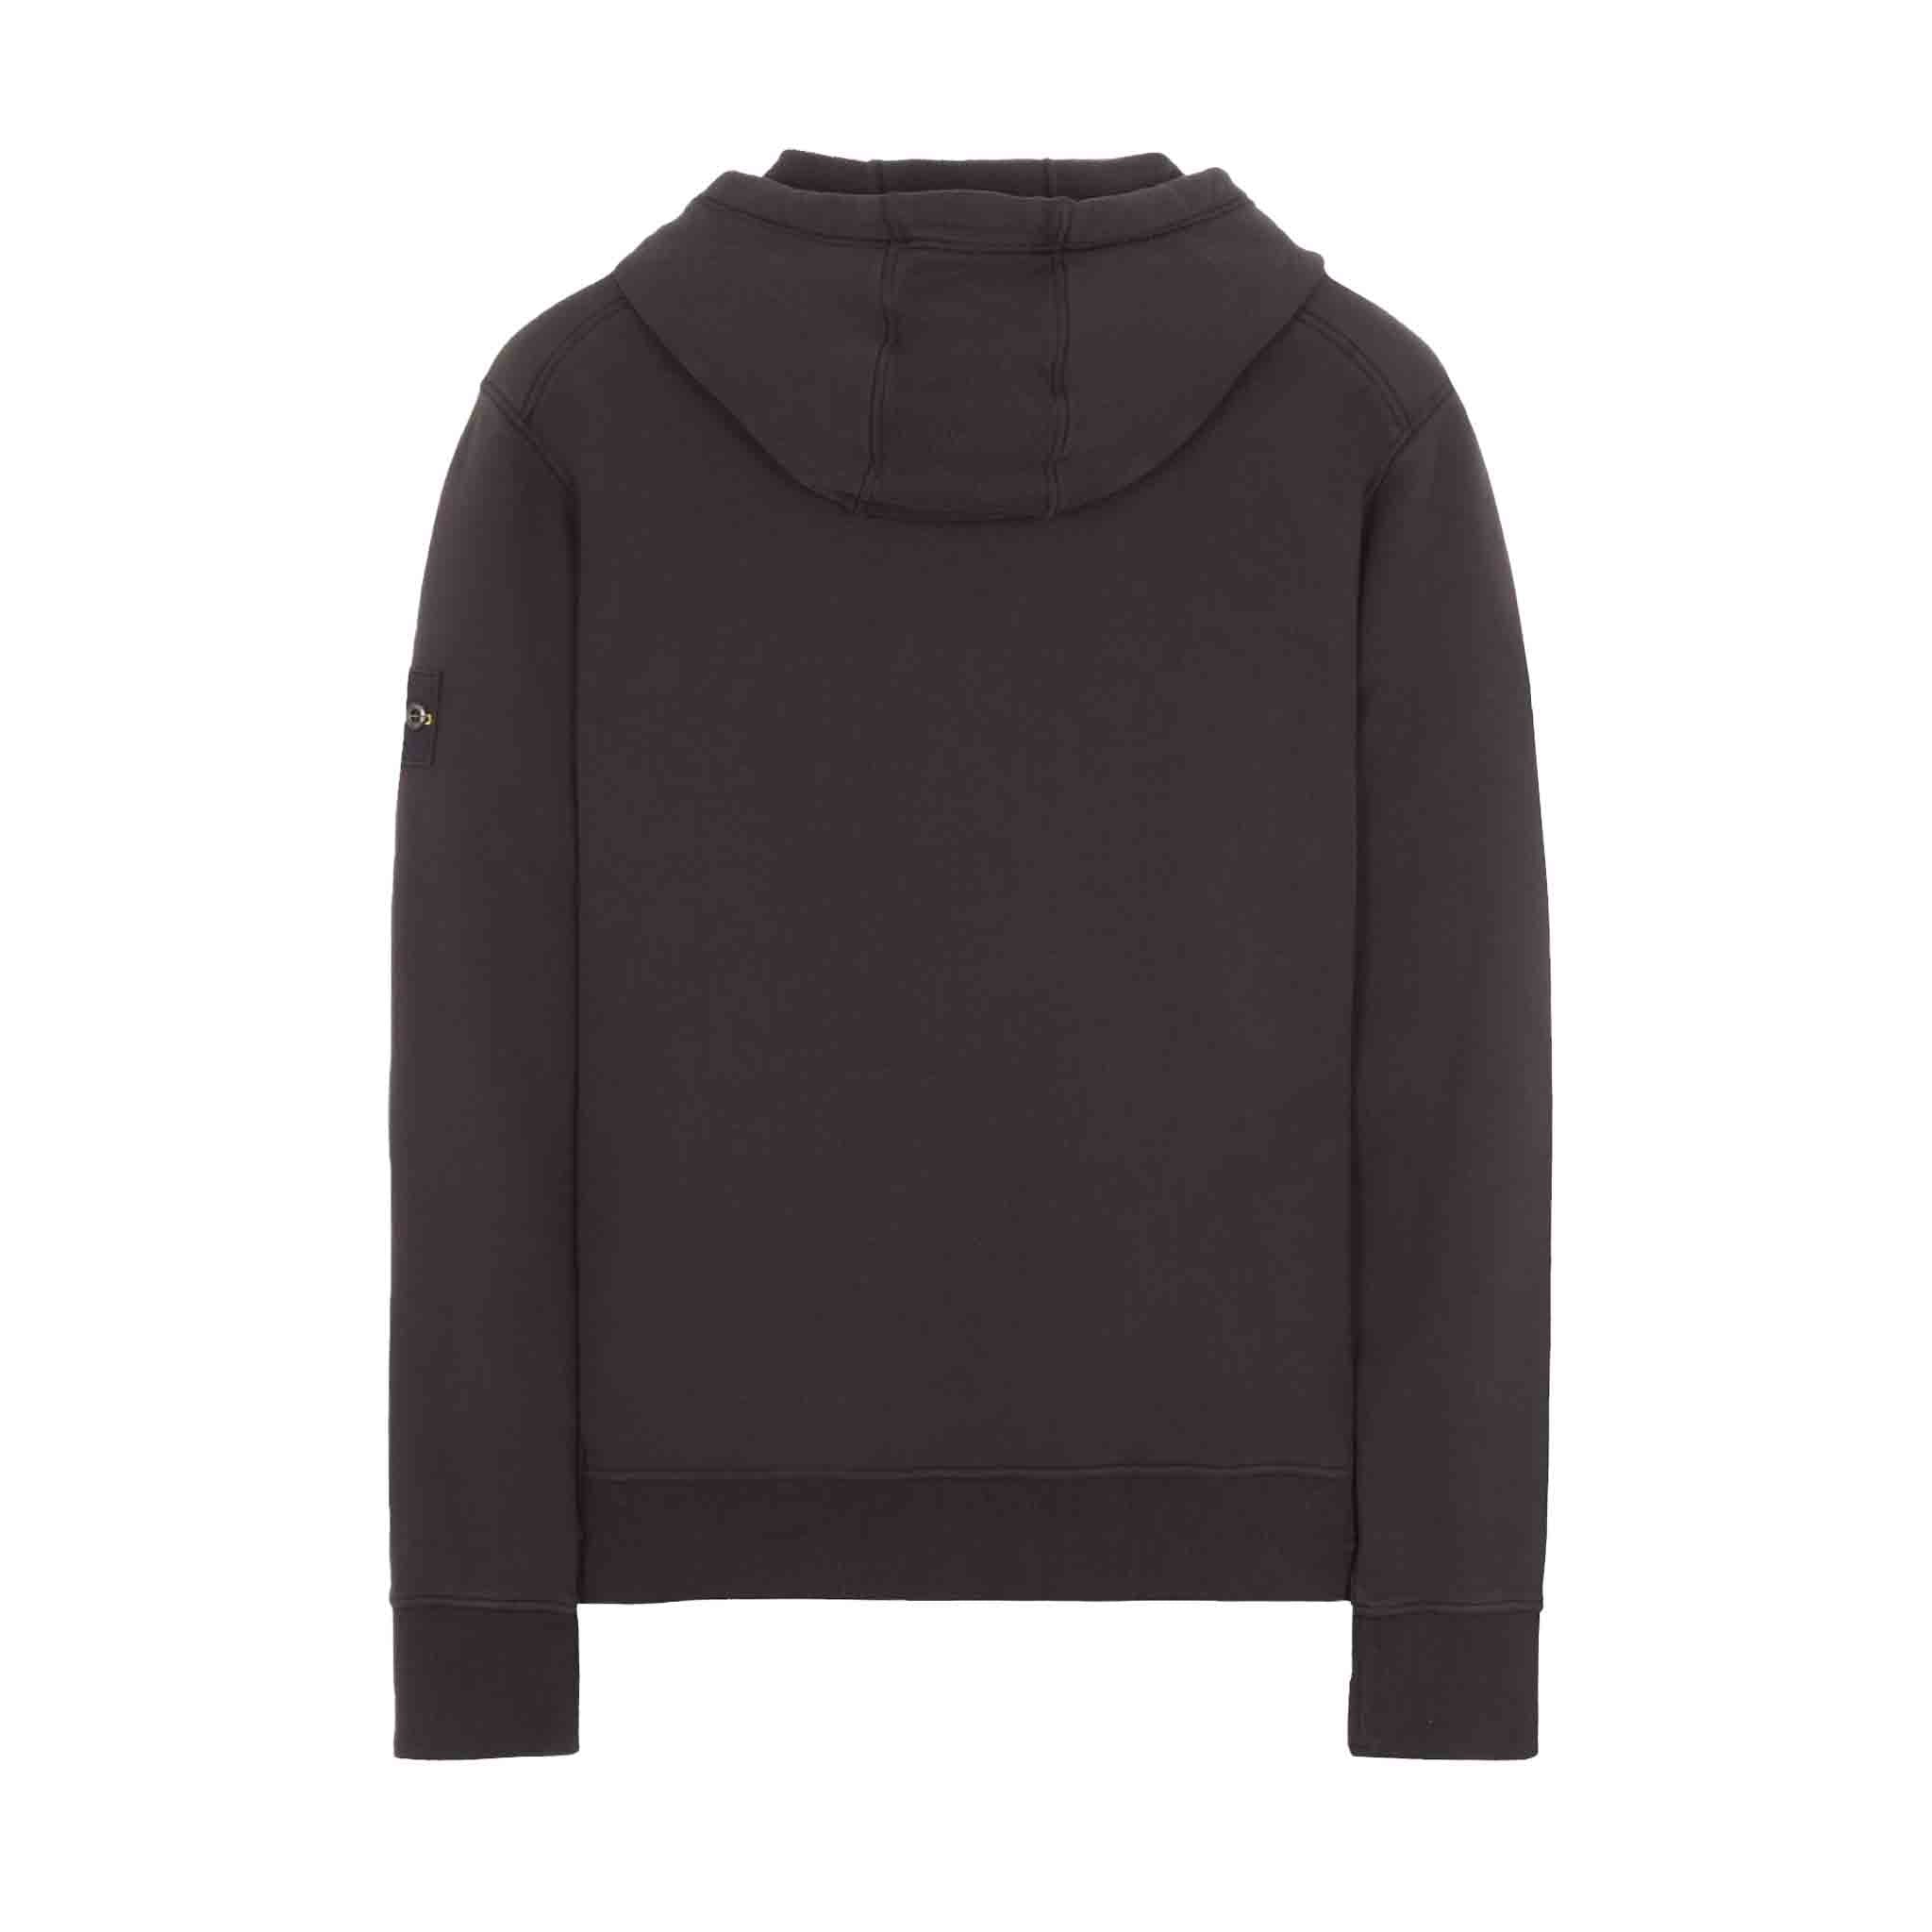 Stone Island Garment Dyed Hooded Sweatshirt in Steel Grey